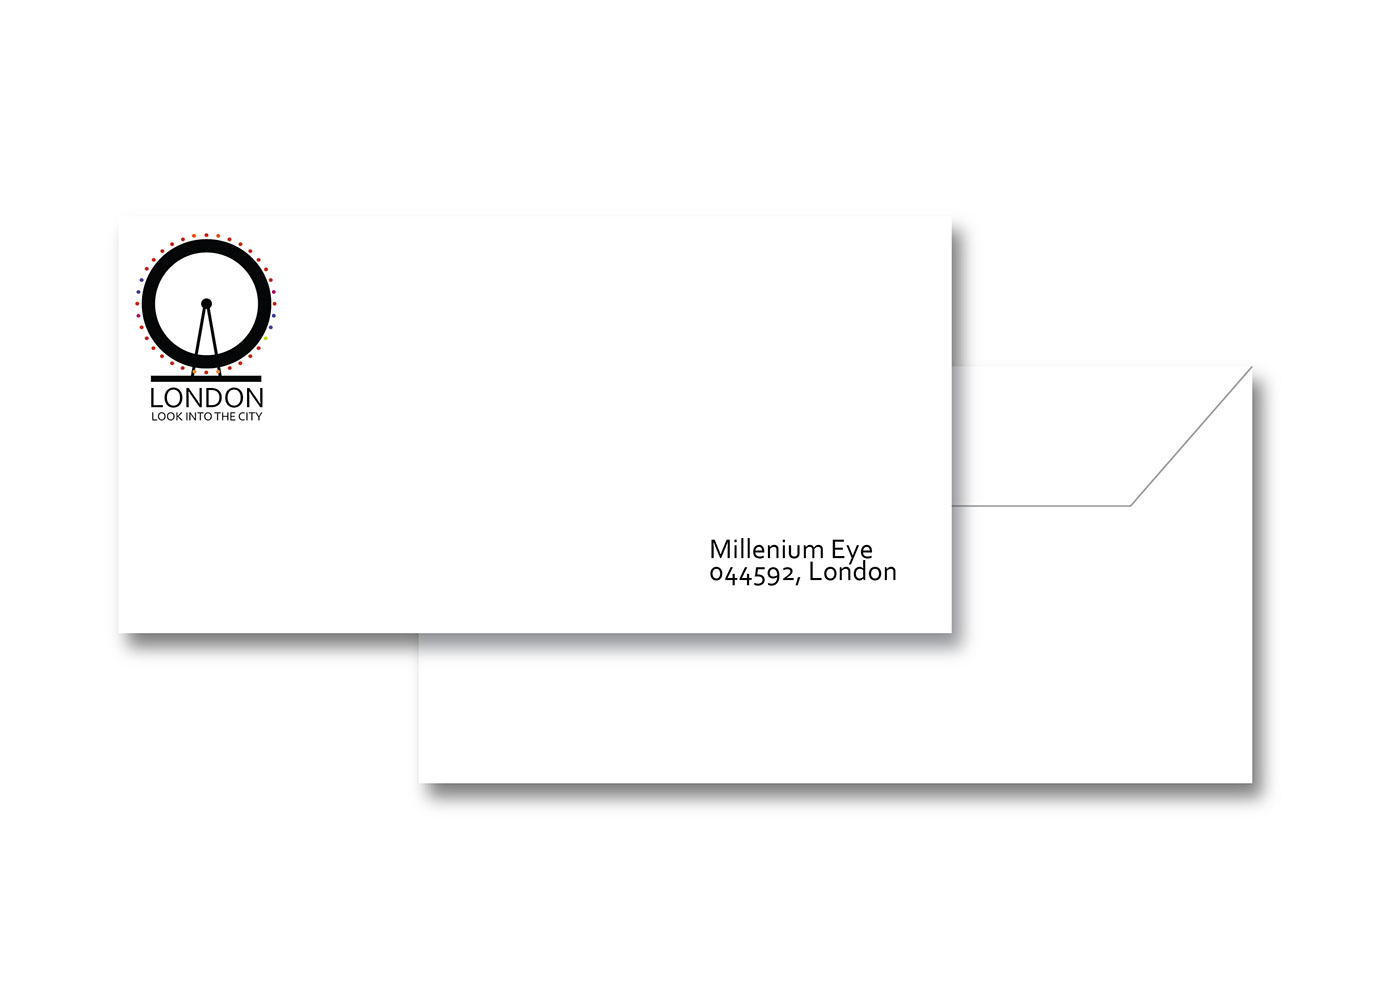 London londoneye graphic Logobranding logo logos brand ied design graphicdesign londondesign londongraphic